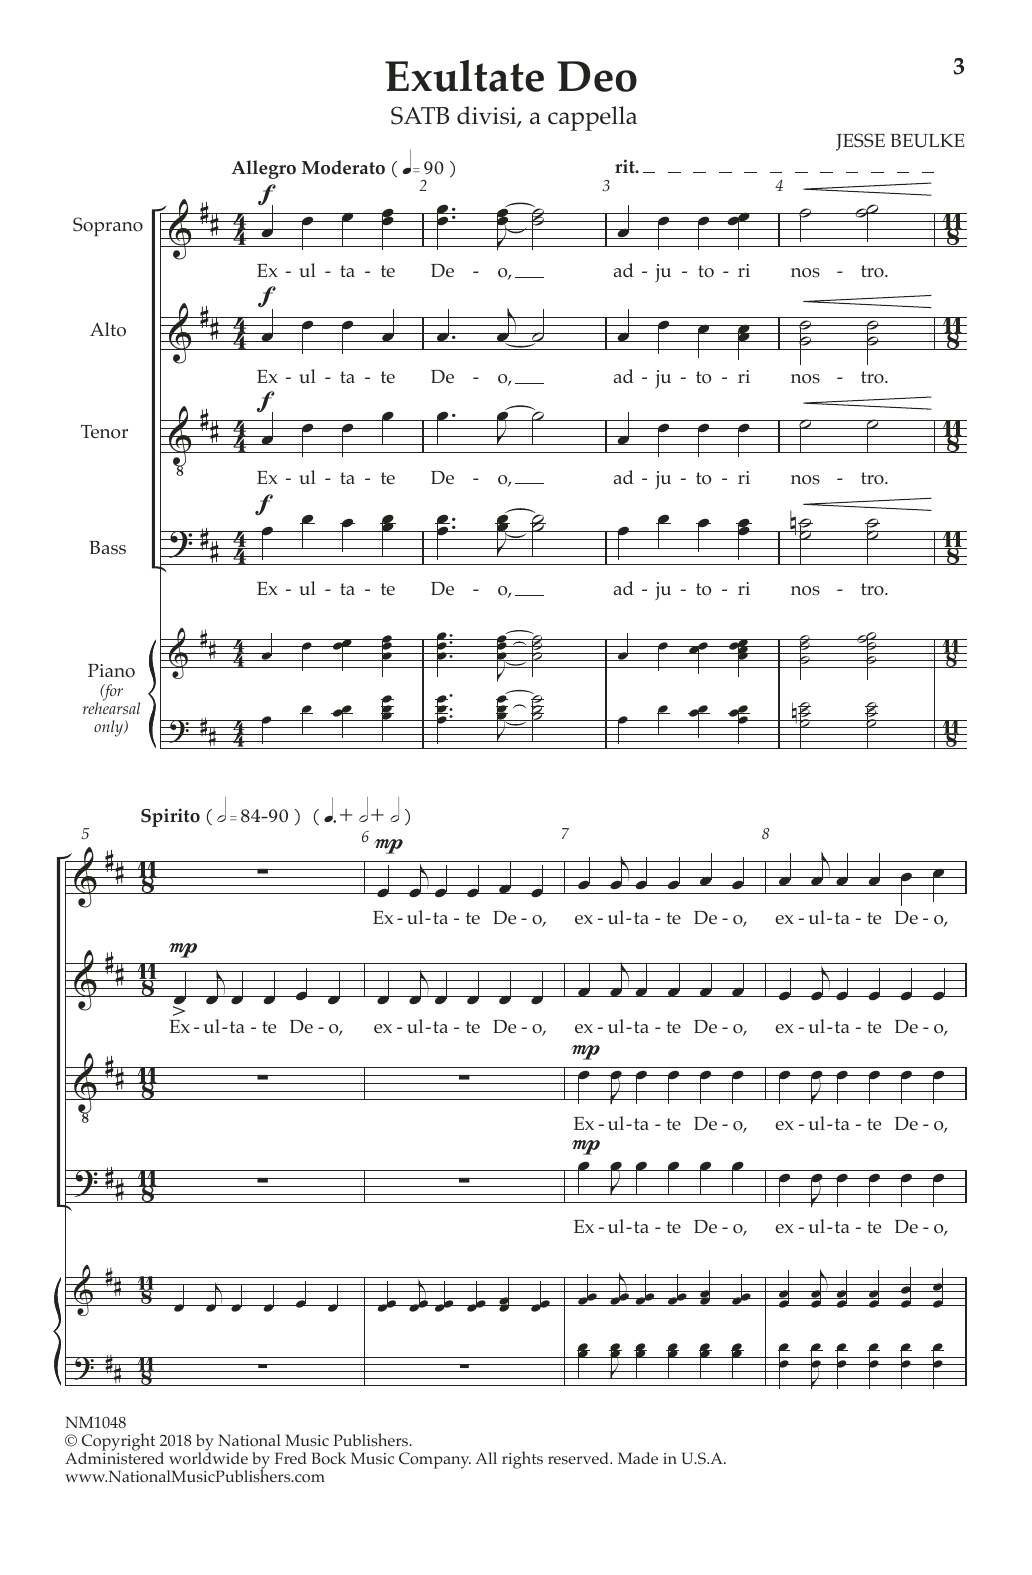 Jesse Beulke Exultate Deo Sheet Music Notes & Chords for SATB Choir - Download or Print PDF